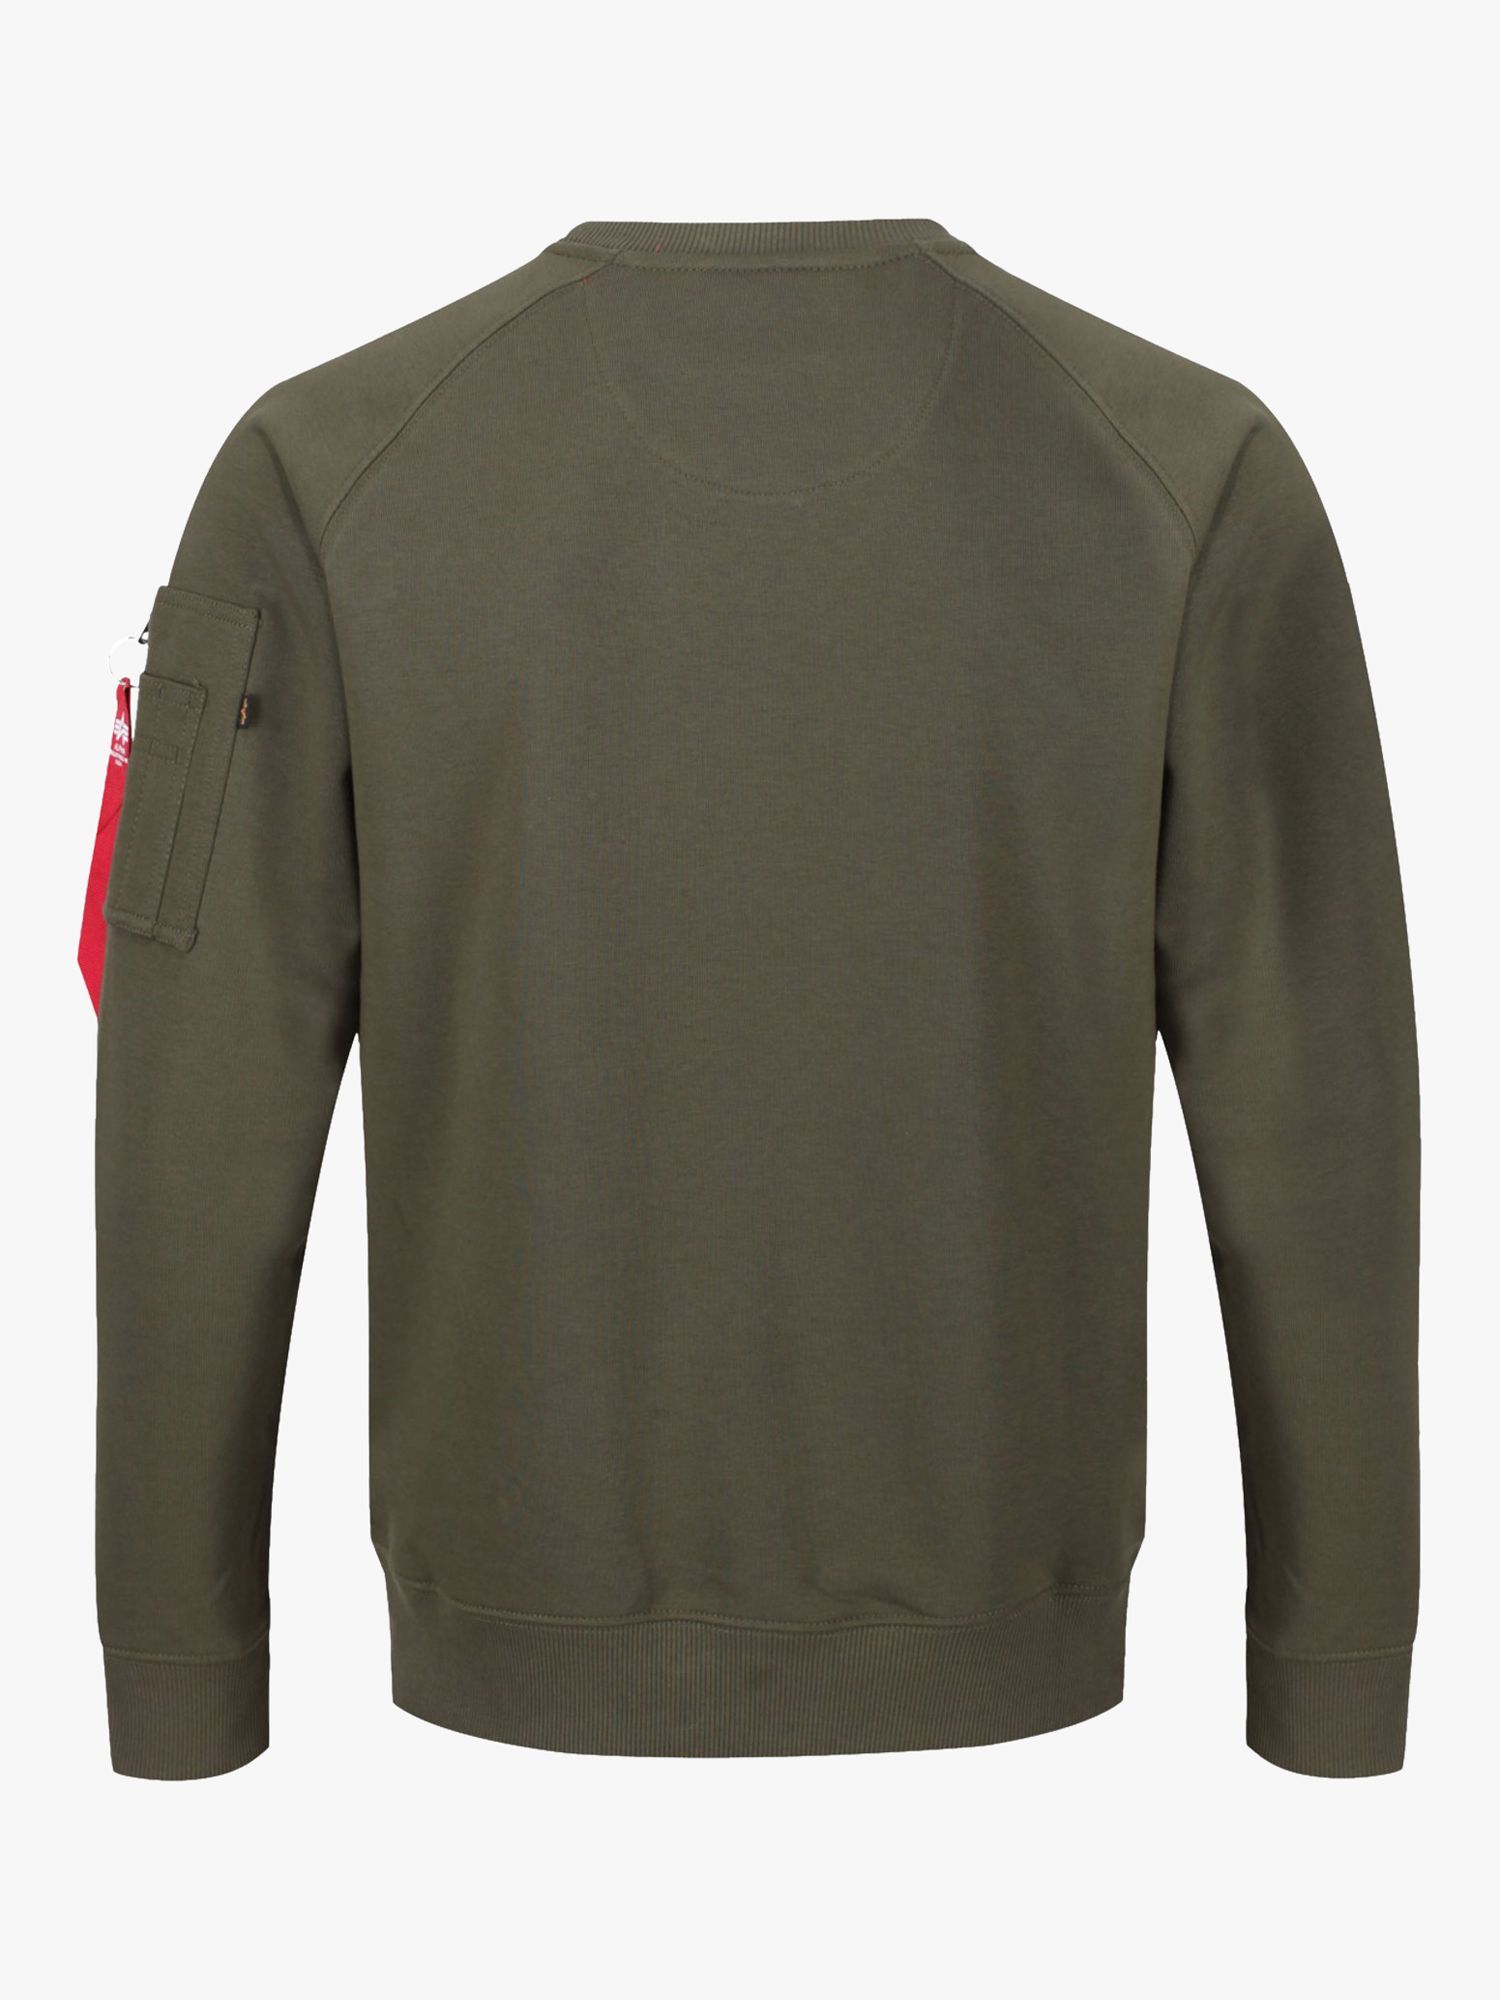 Alpha Industries X-Fit Zip Pocket Lewis Sleeve John Partners & 257 Green Sweatshirt, Dark at